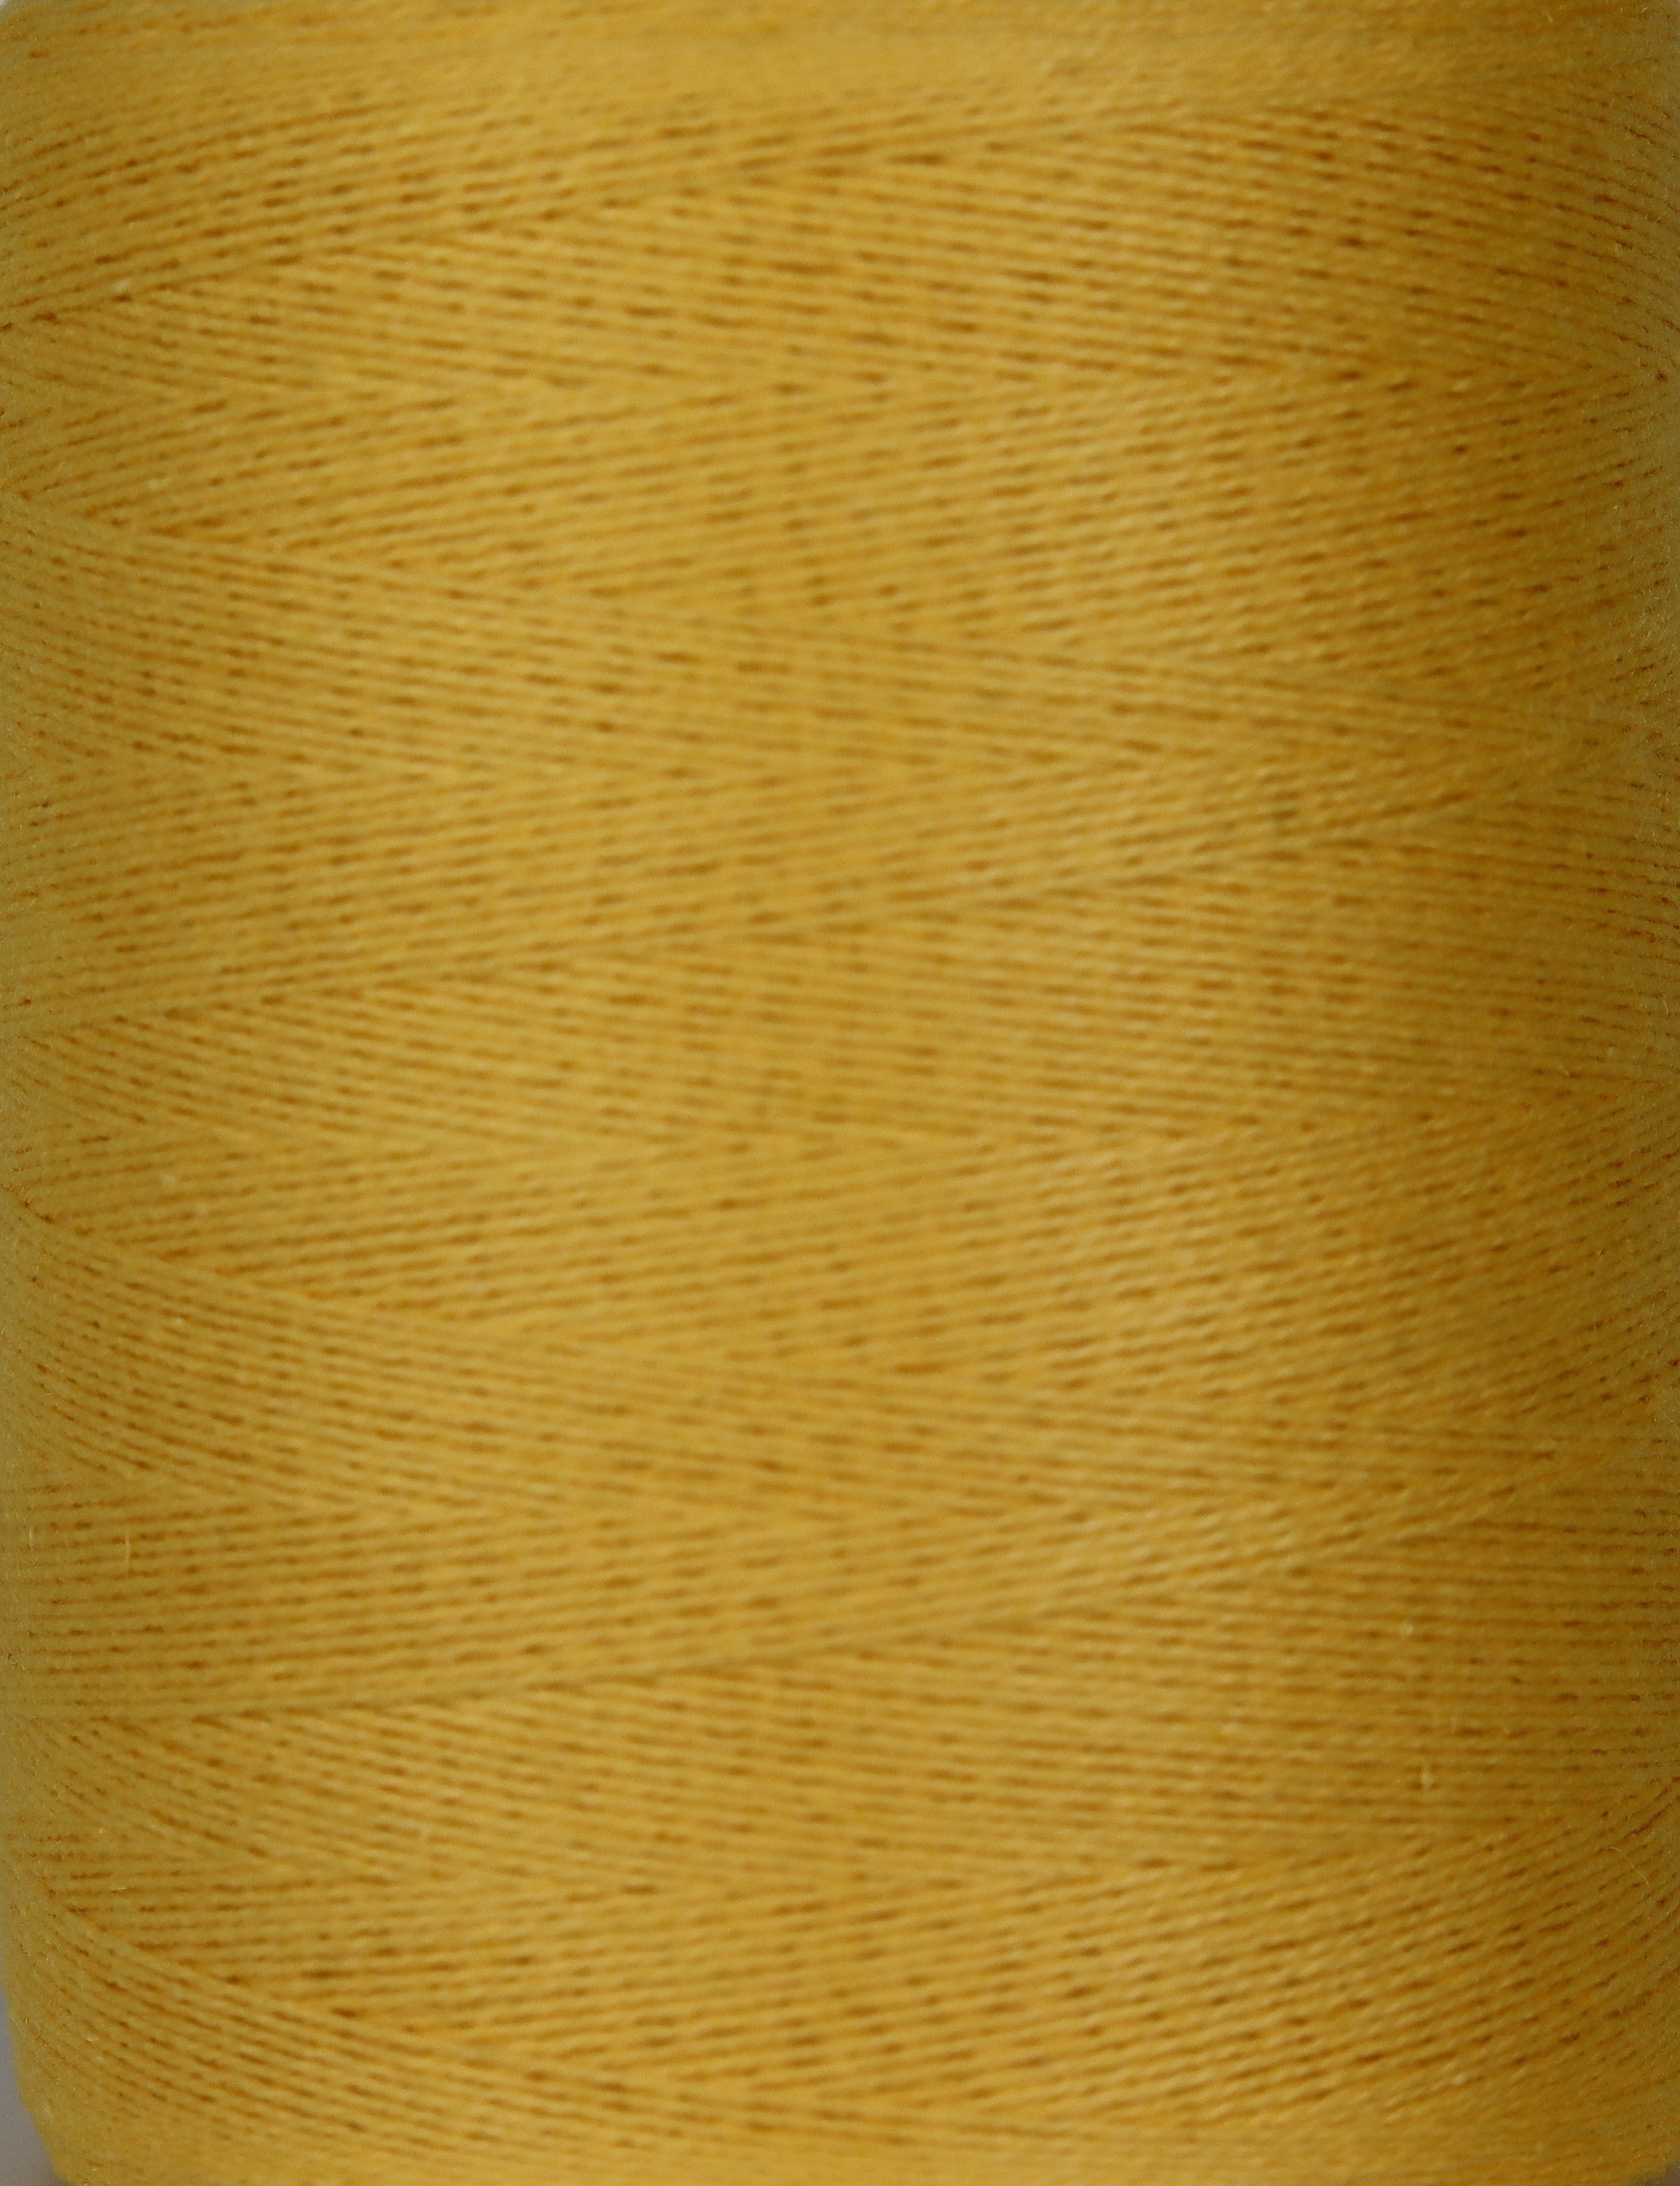 Cotolin 2/8 (50% coton/50%lin) - Cottolin 8/2 (50% Cotton/50% Linen)